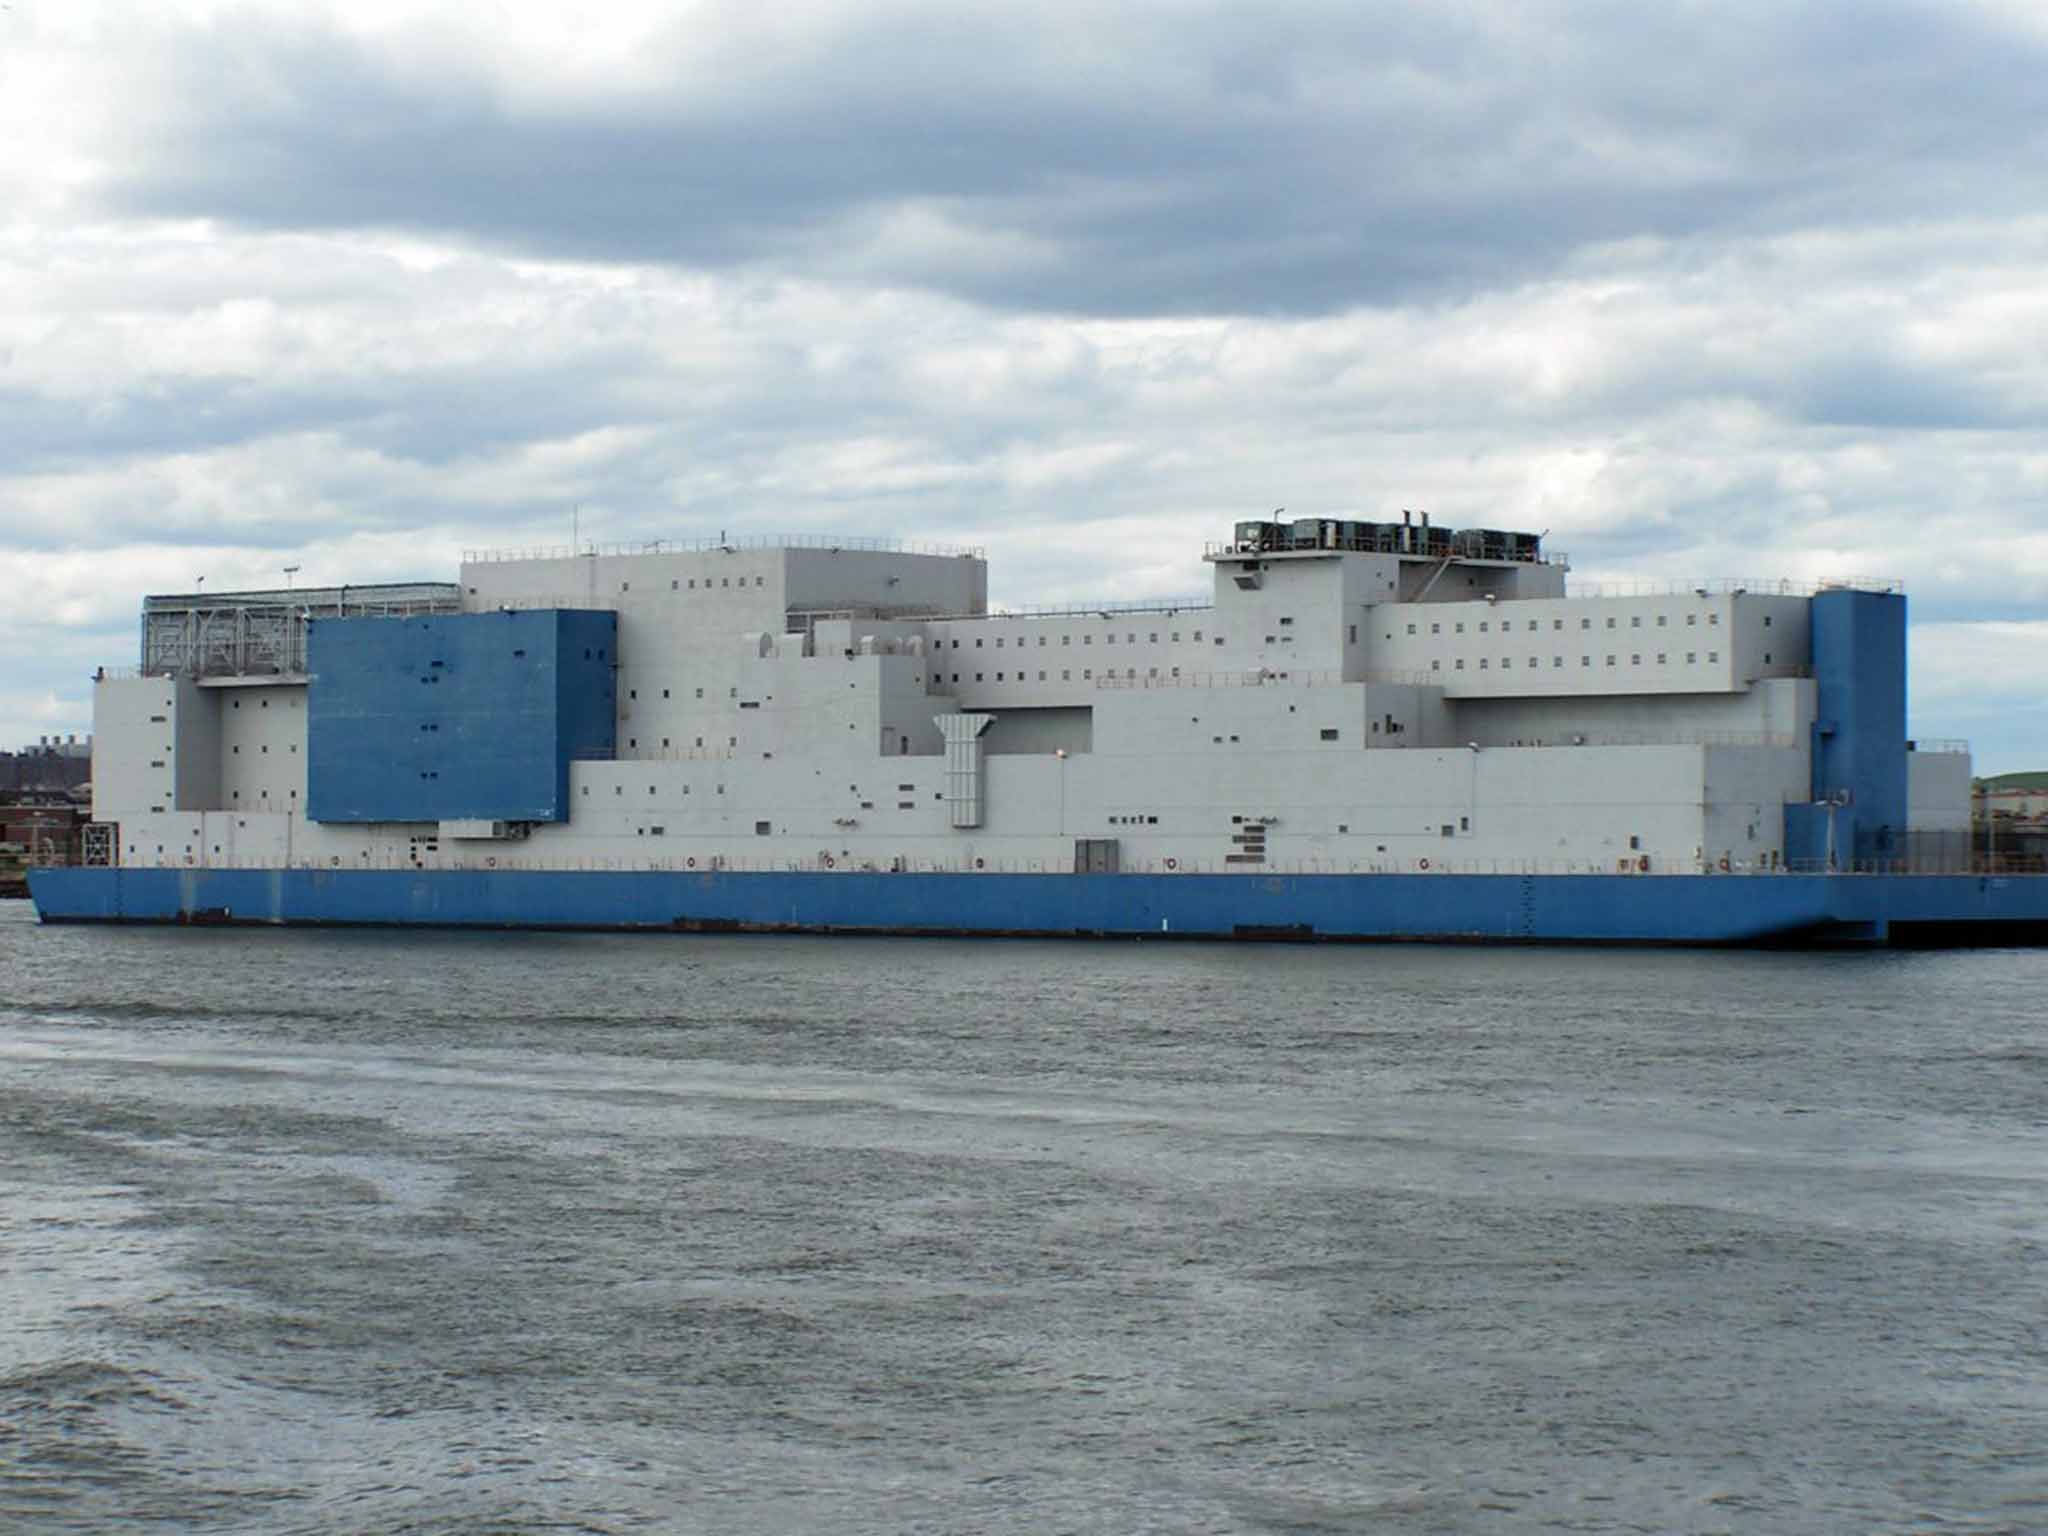 The Vernon C Bain, a New York prison barge